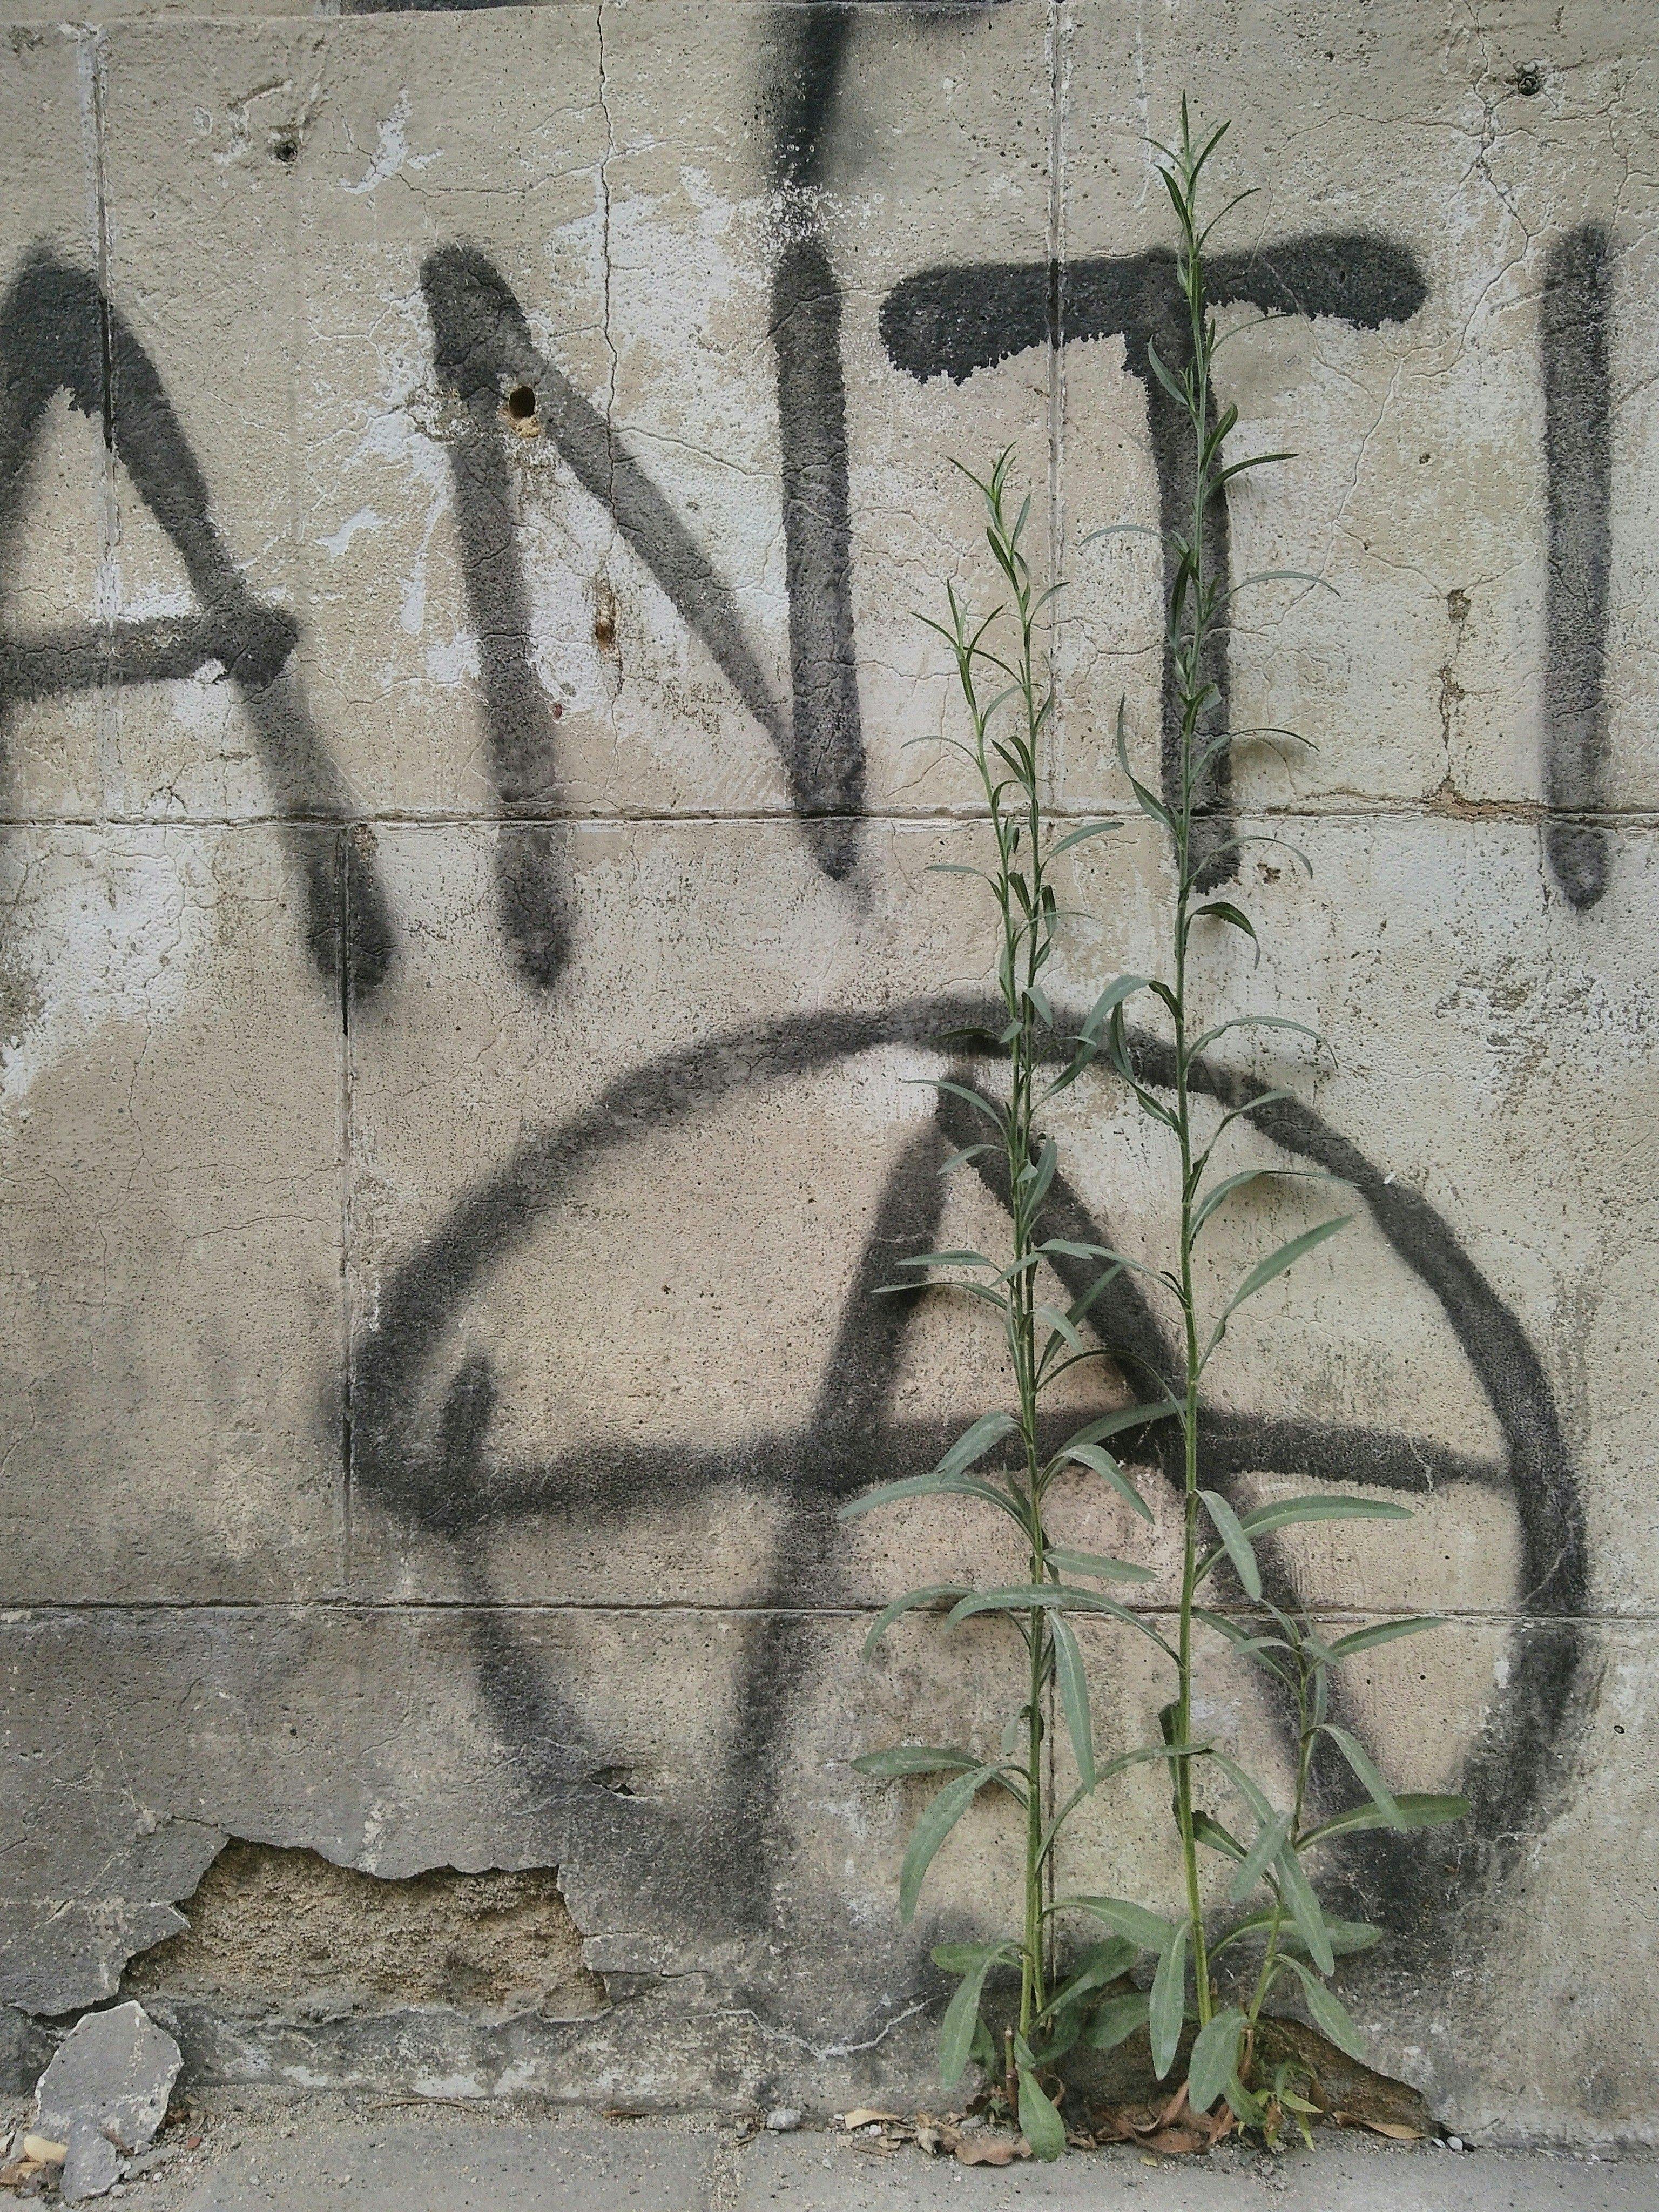 graffiti-wall-weeds.jpg